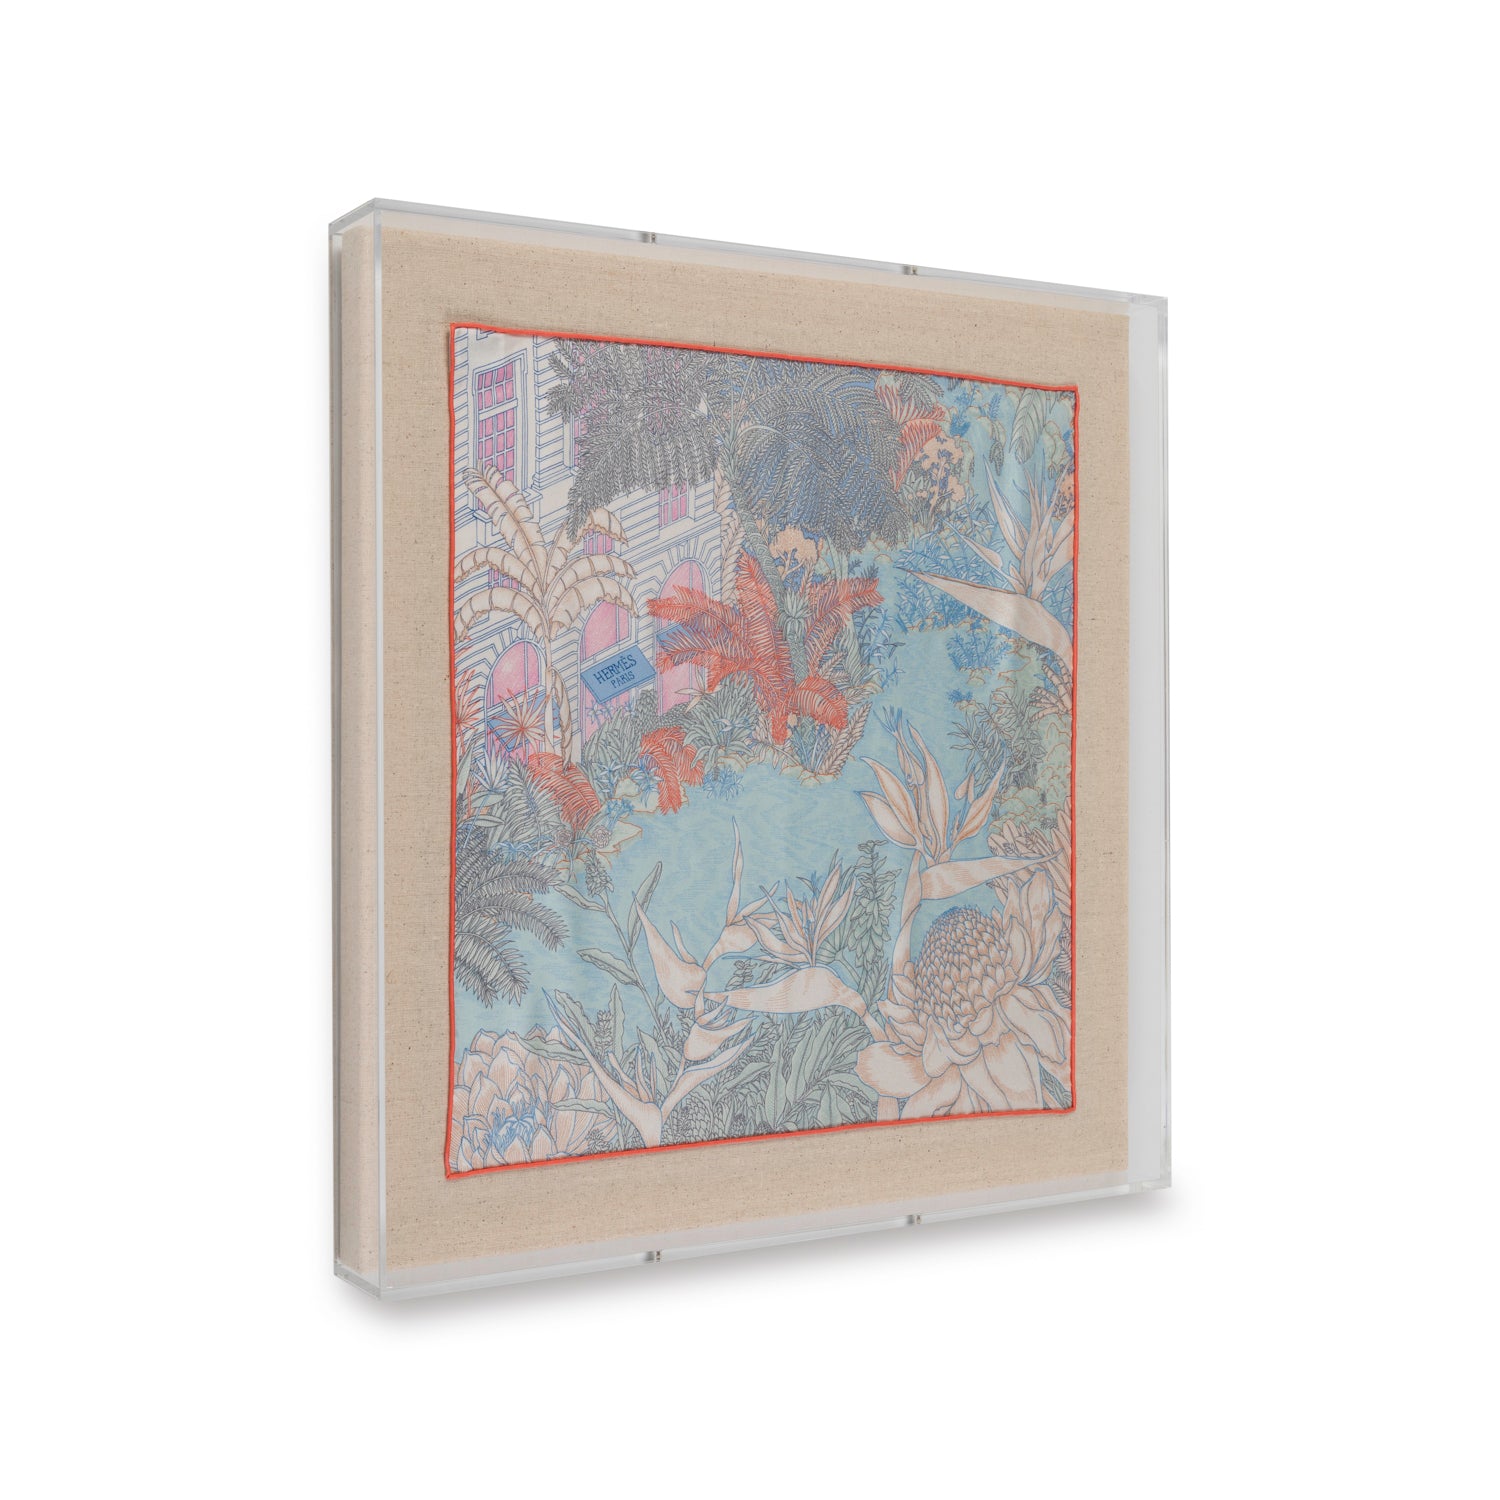 Framed Hermés Faubourg Tropical Bleu Ciel Red Fronds Silk Scarf in a 20x20x2